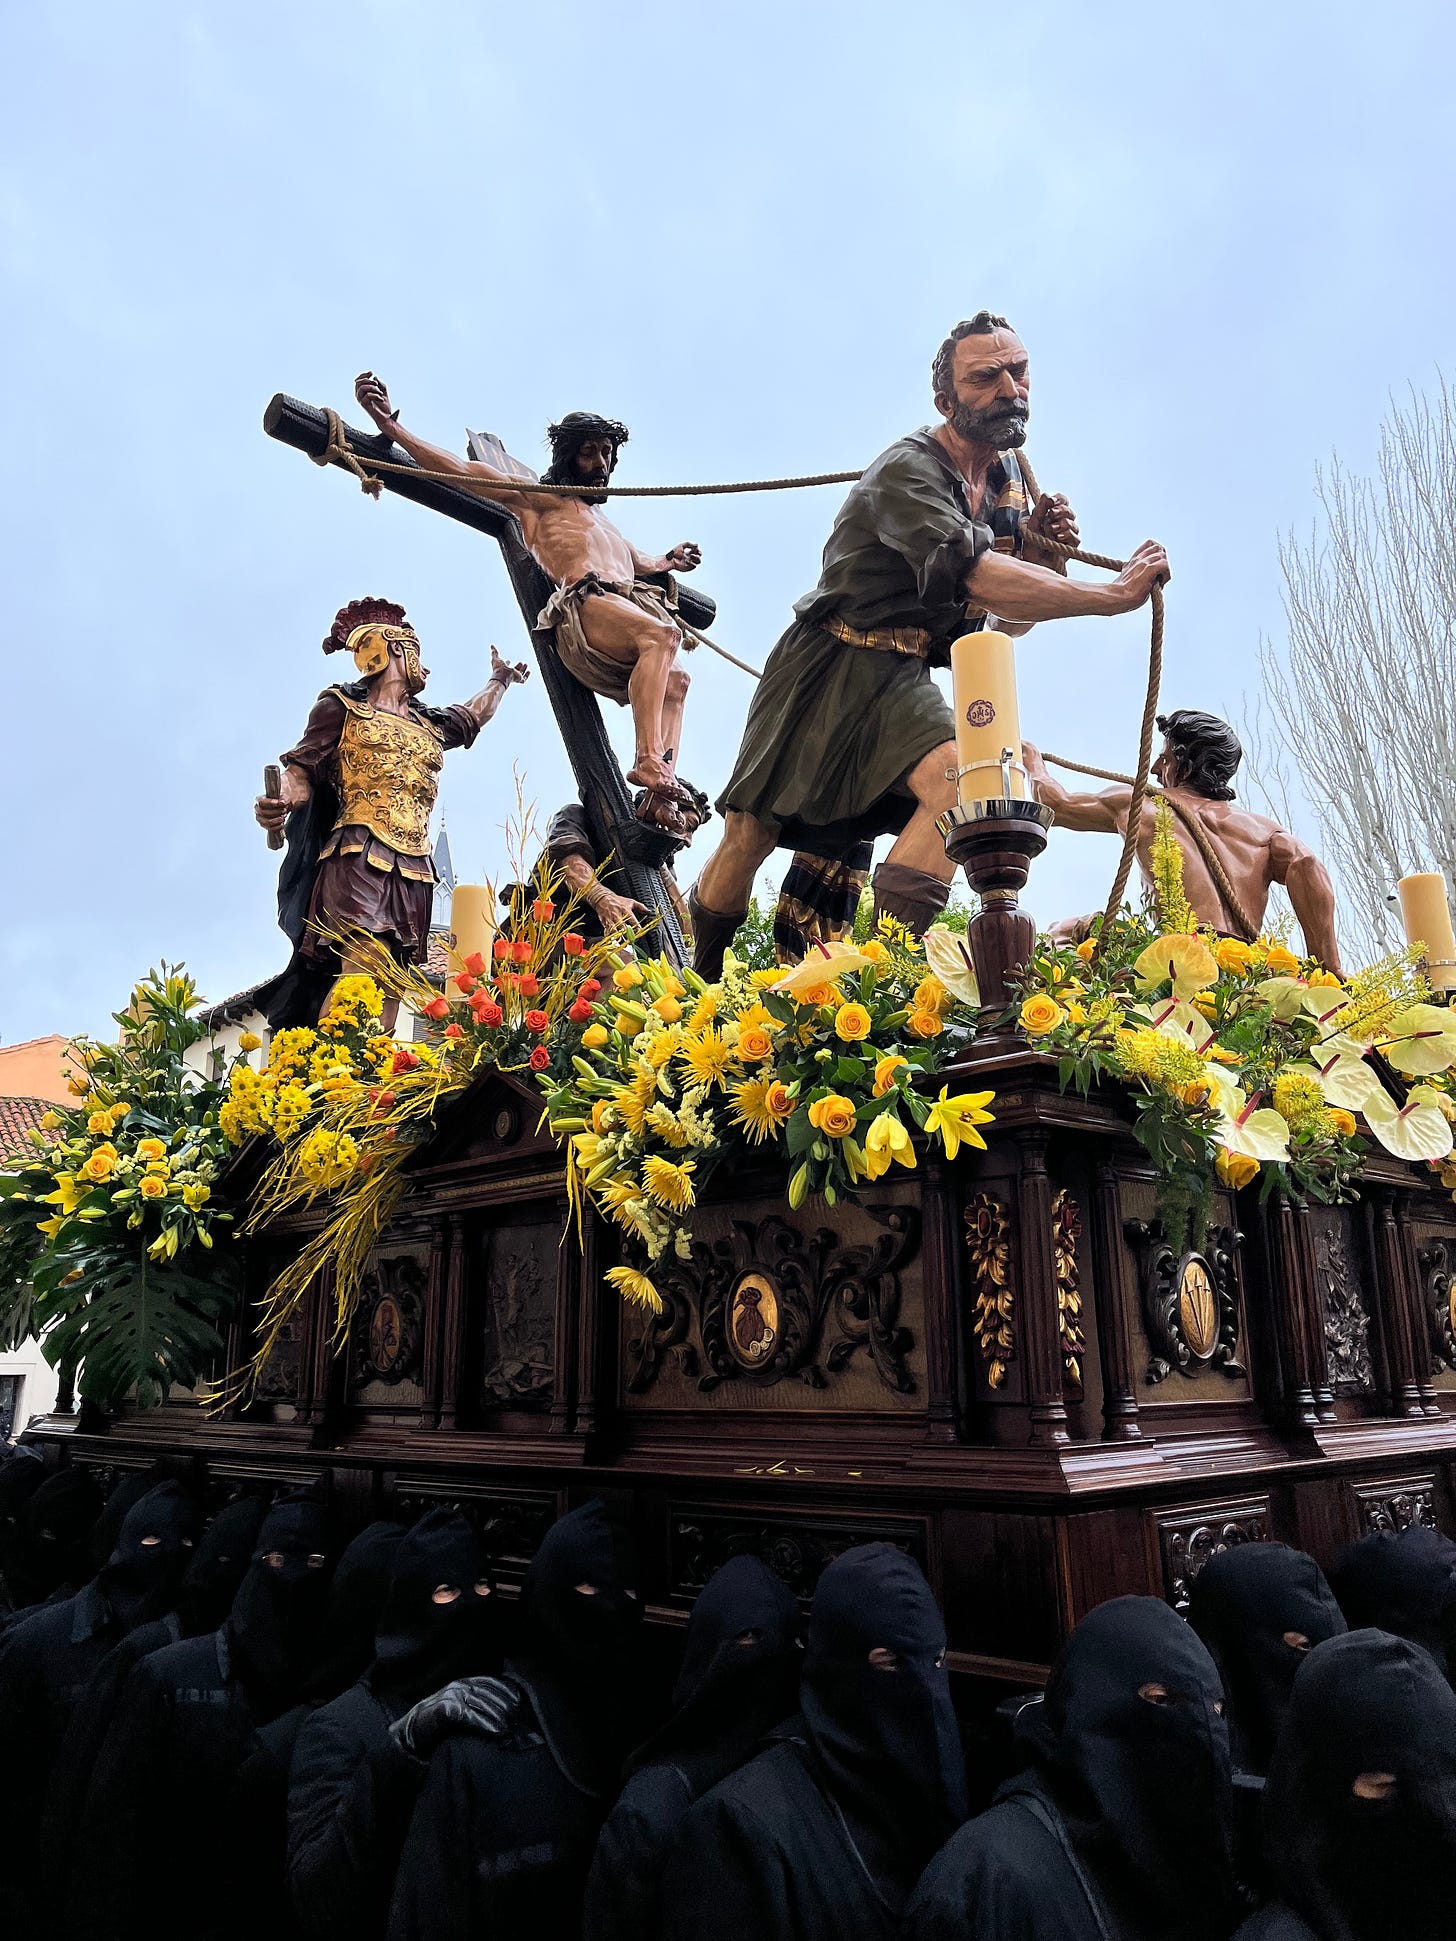 A Semana Santa procession in León, Spain